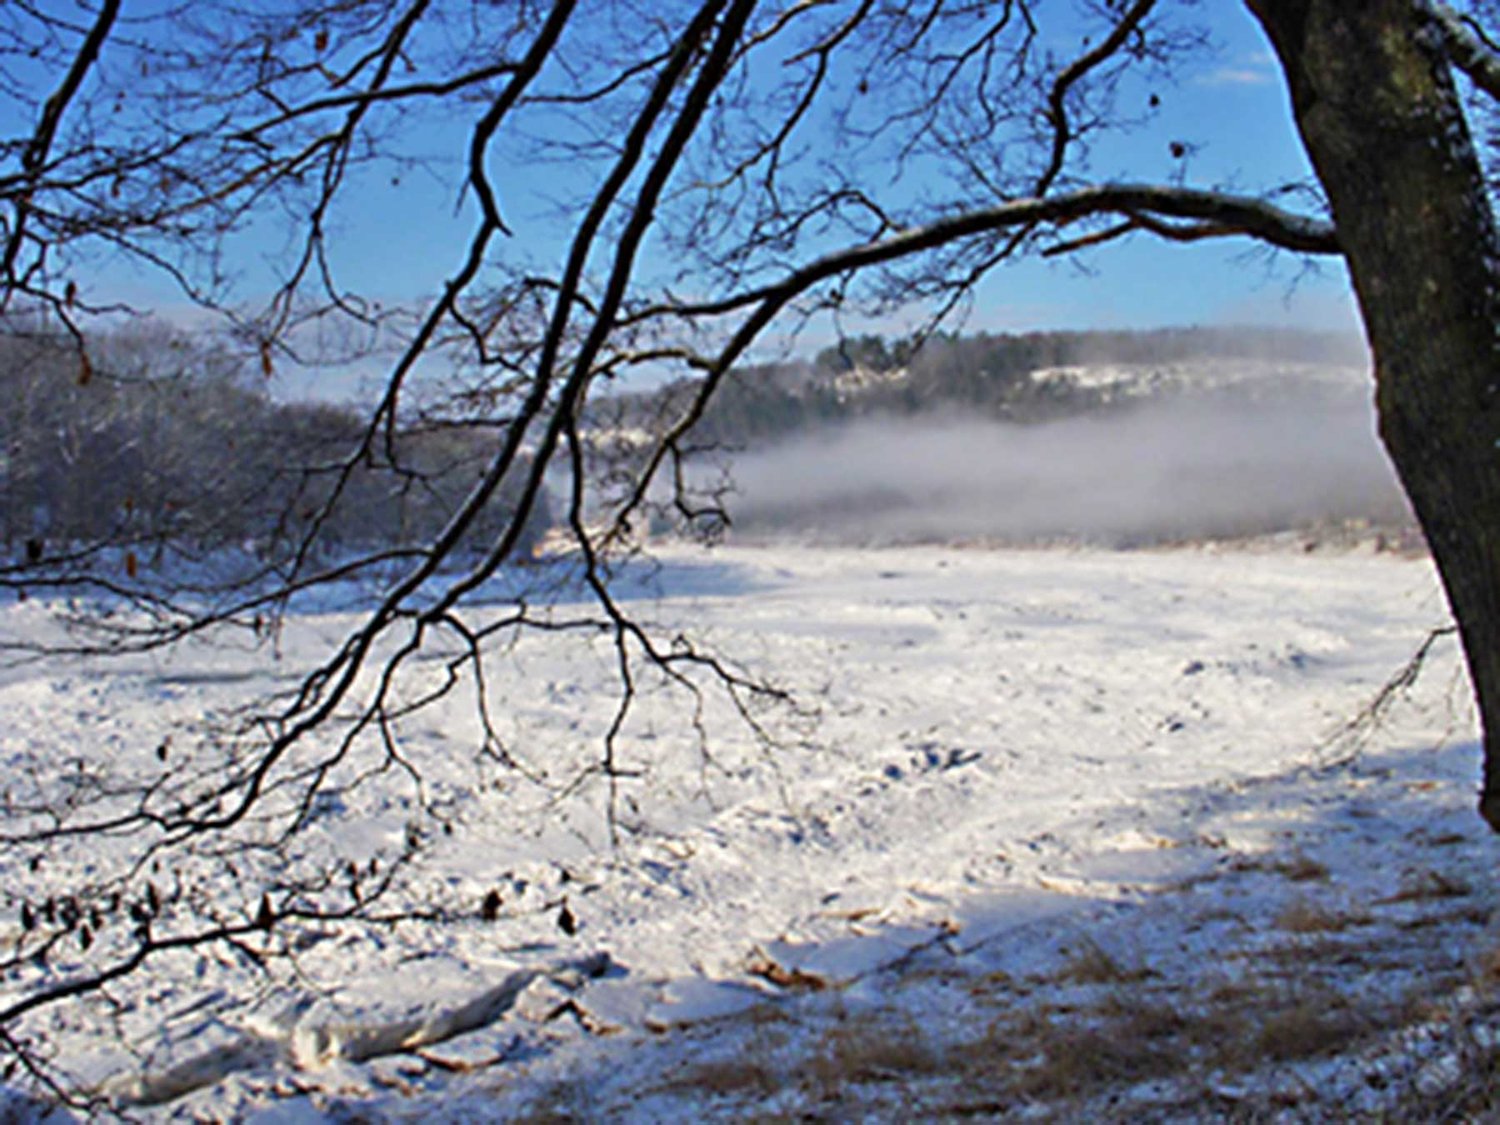 The Upper Delaware in winter.